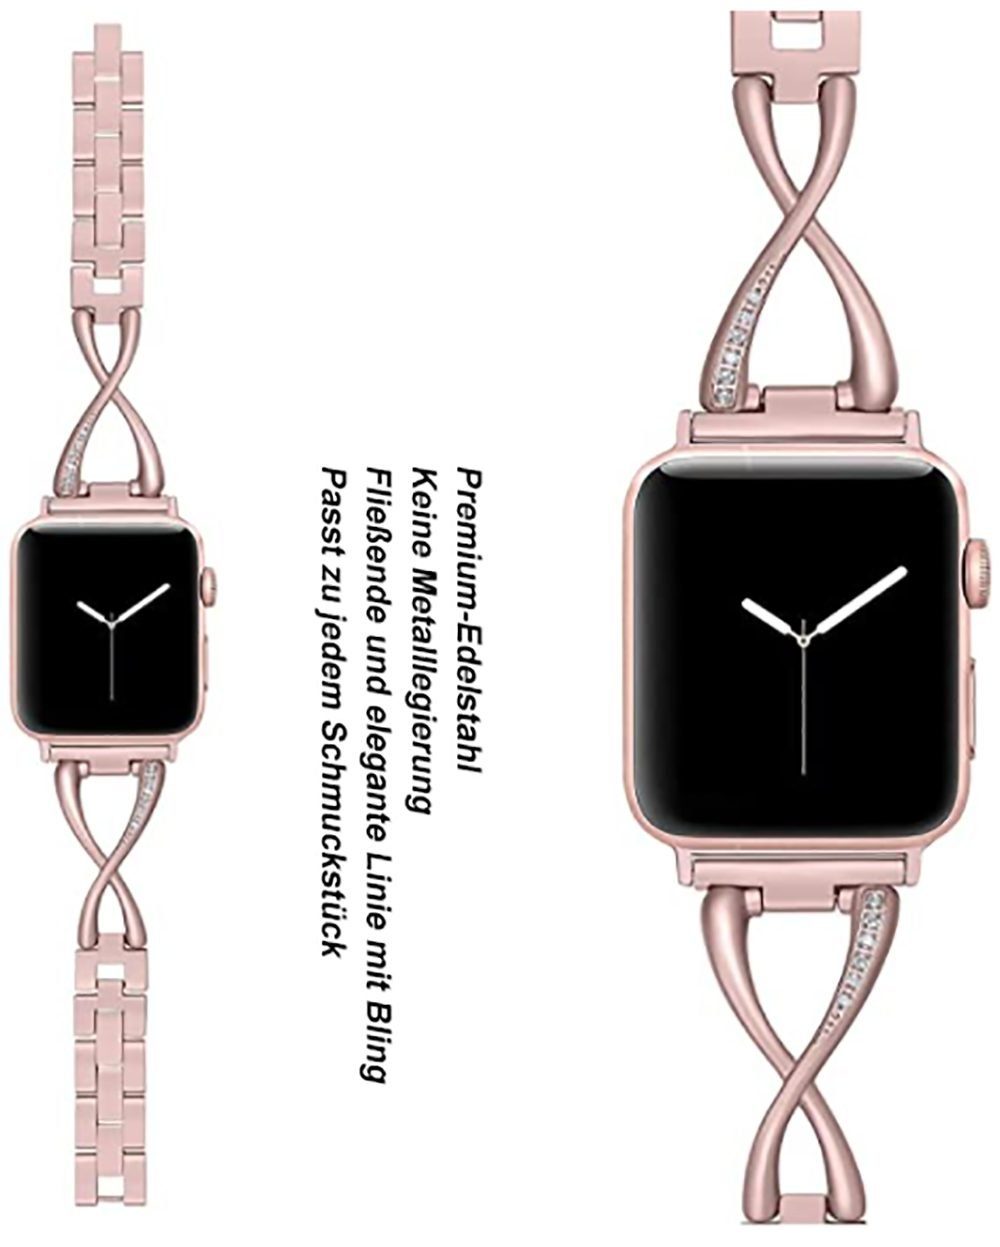 Diida Smartwatch-Armband Watch watch Rosa 1-7,38/40mm Band,Uhrenarmbänder,für apple